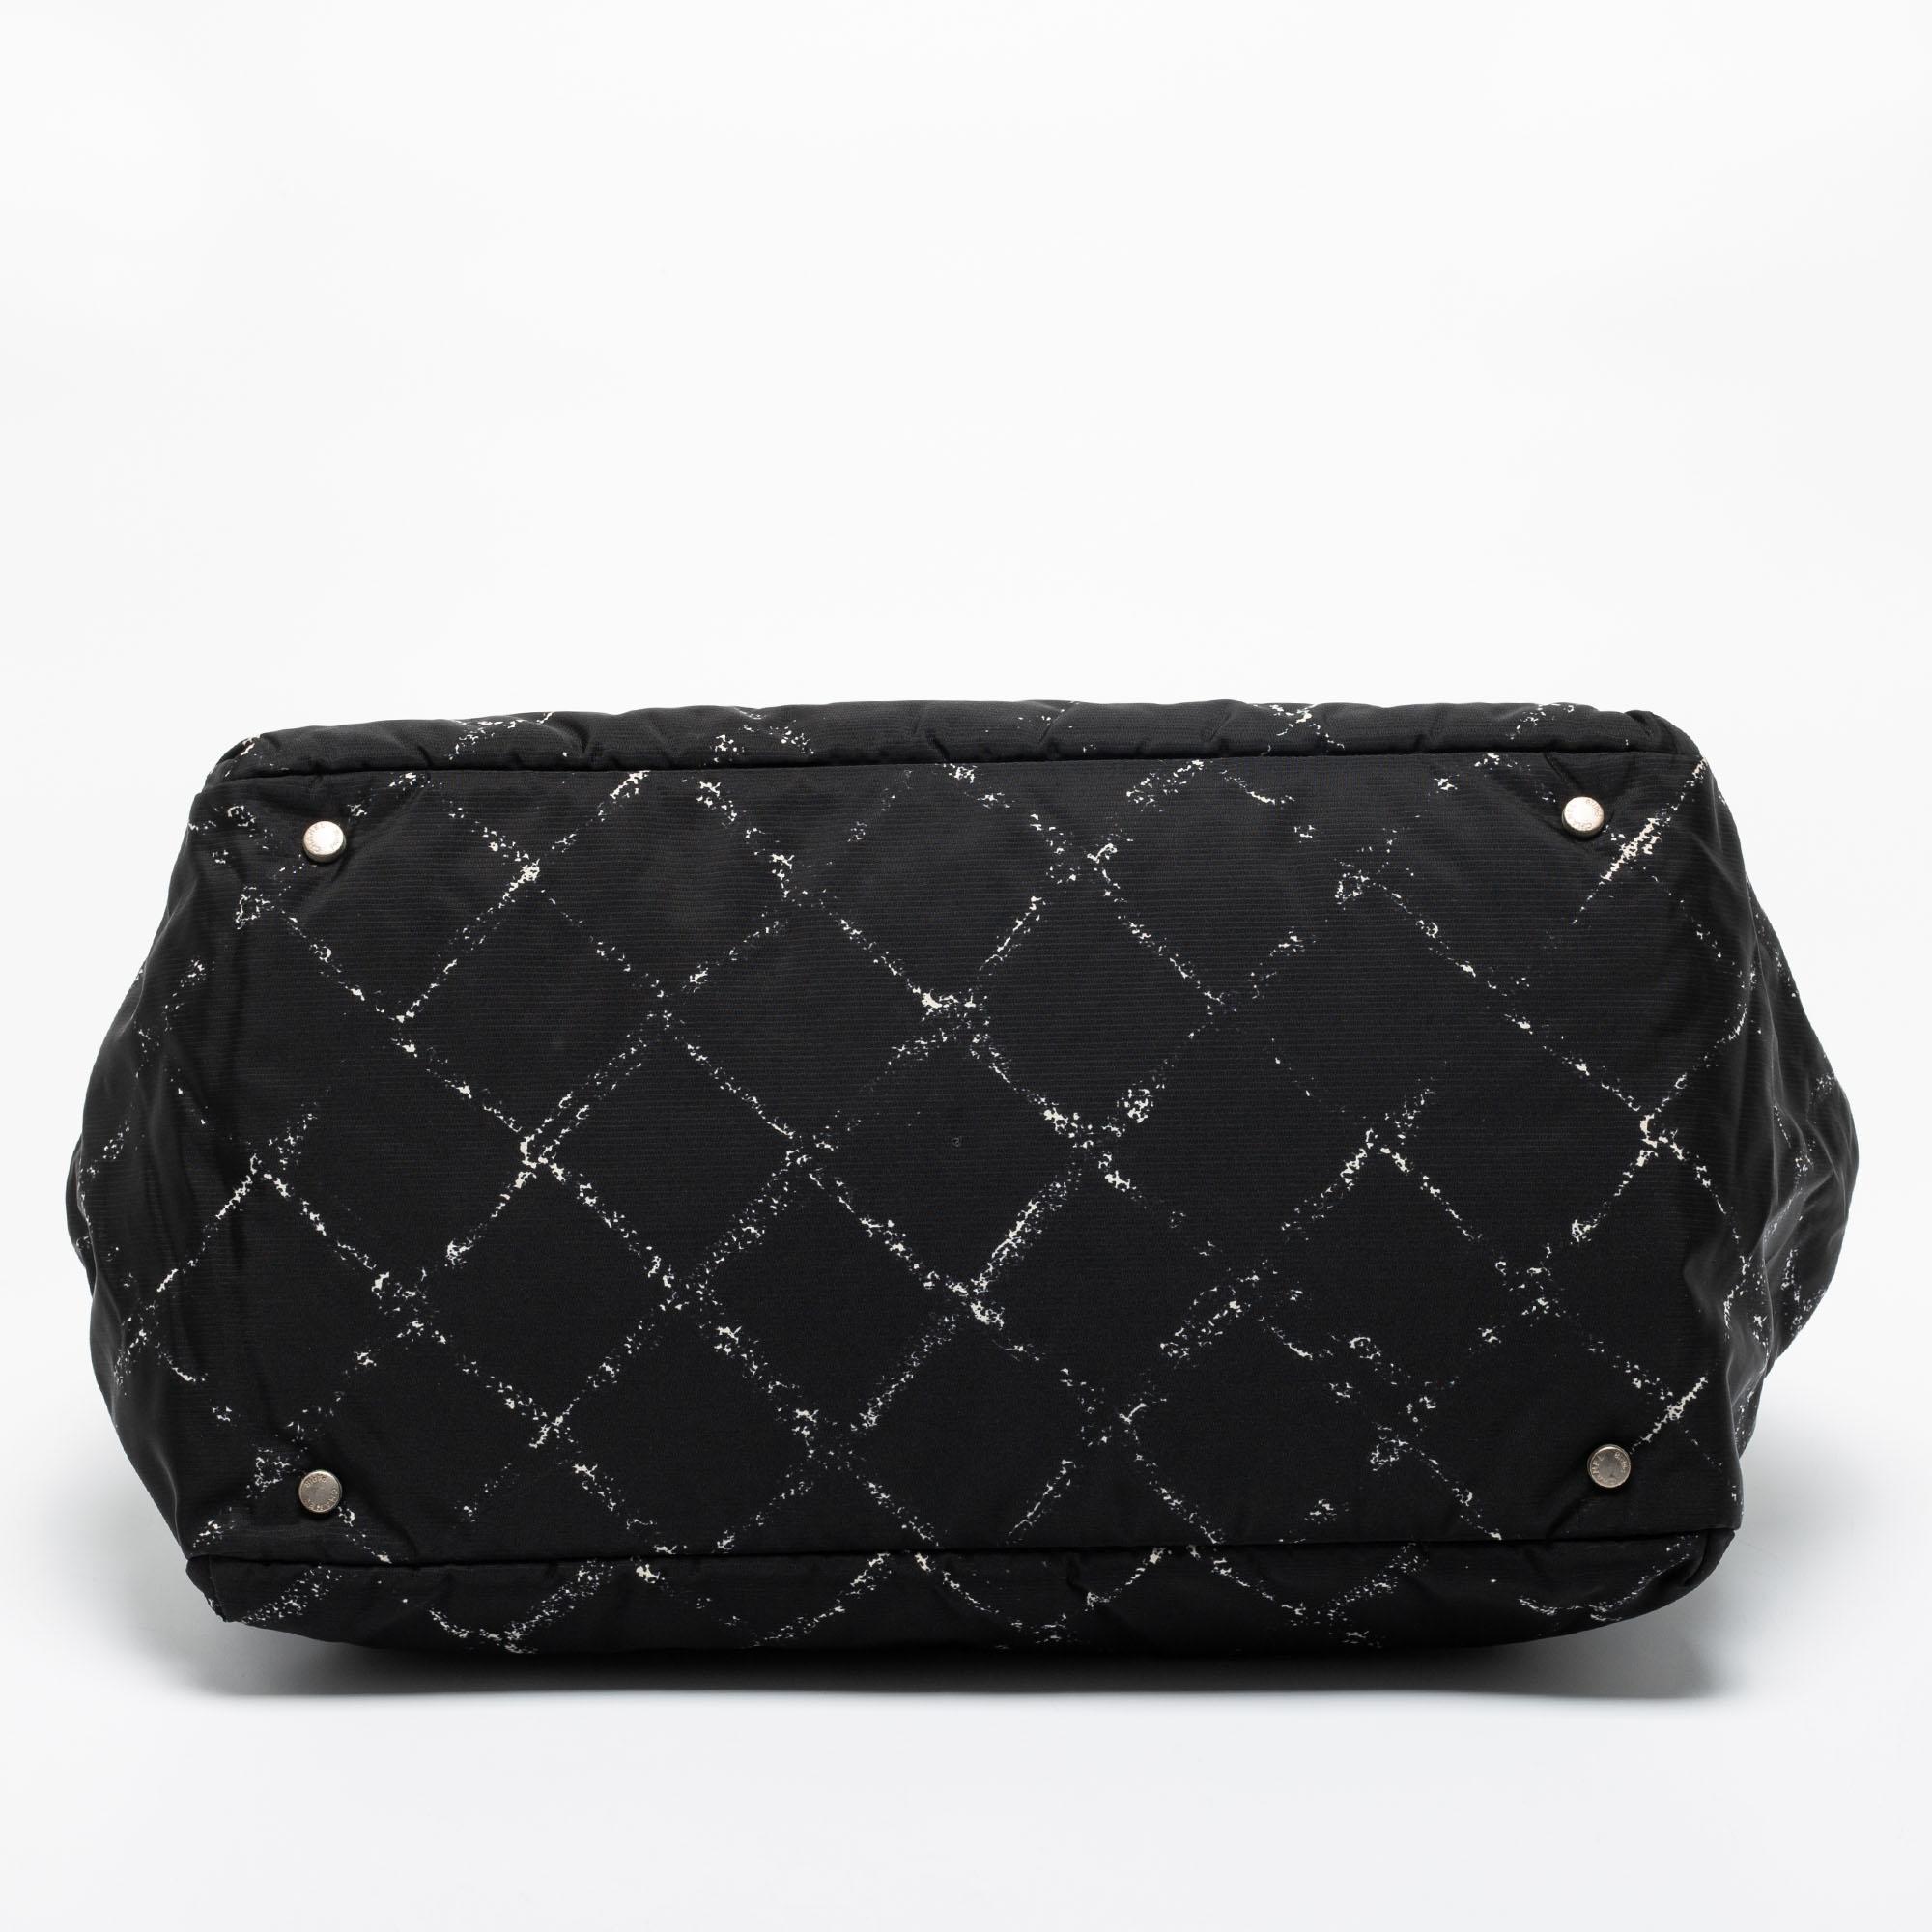 Chanel Black/White Quilted Print Nylon Travel Line Duffel Bag 4